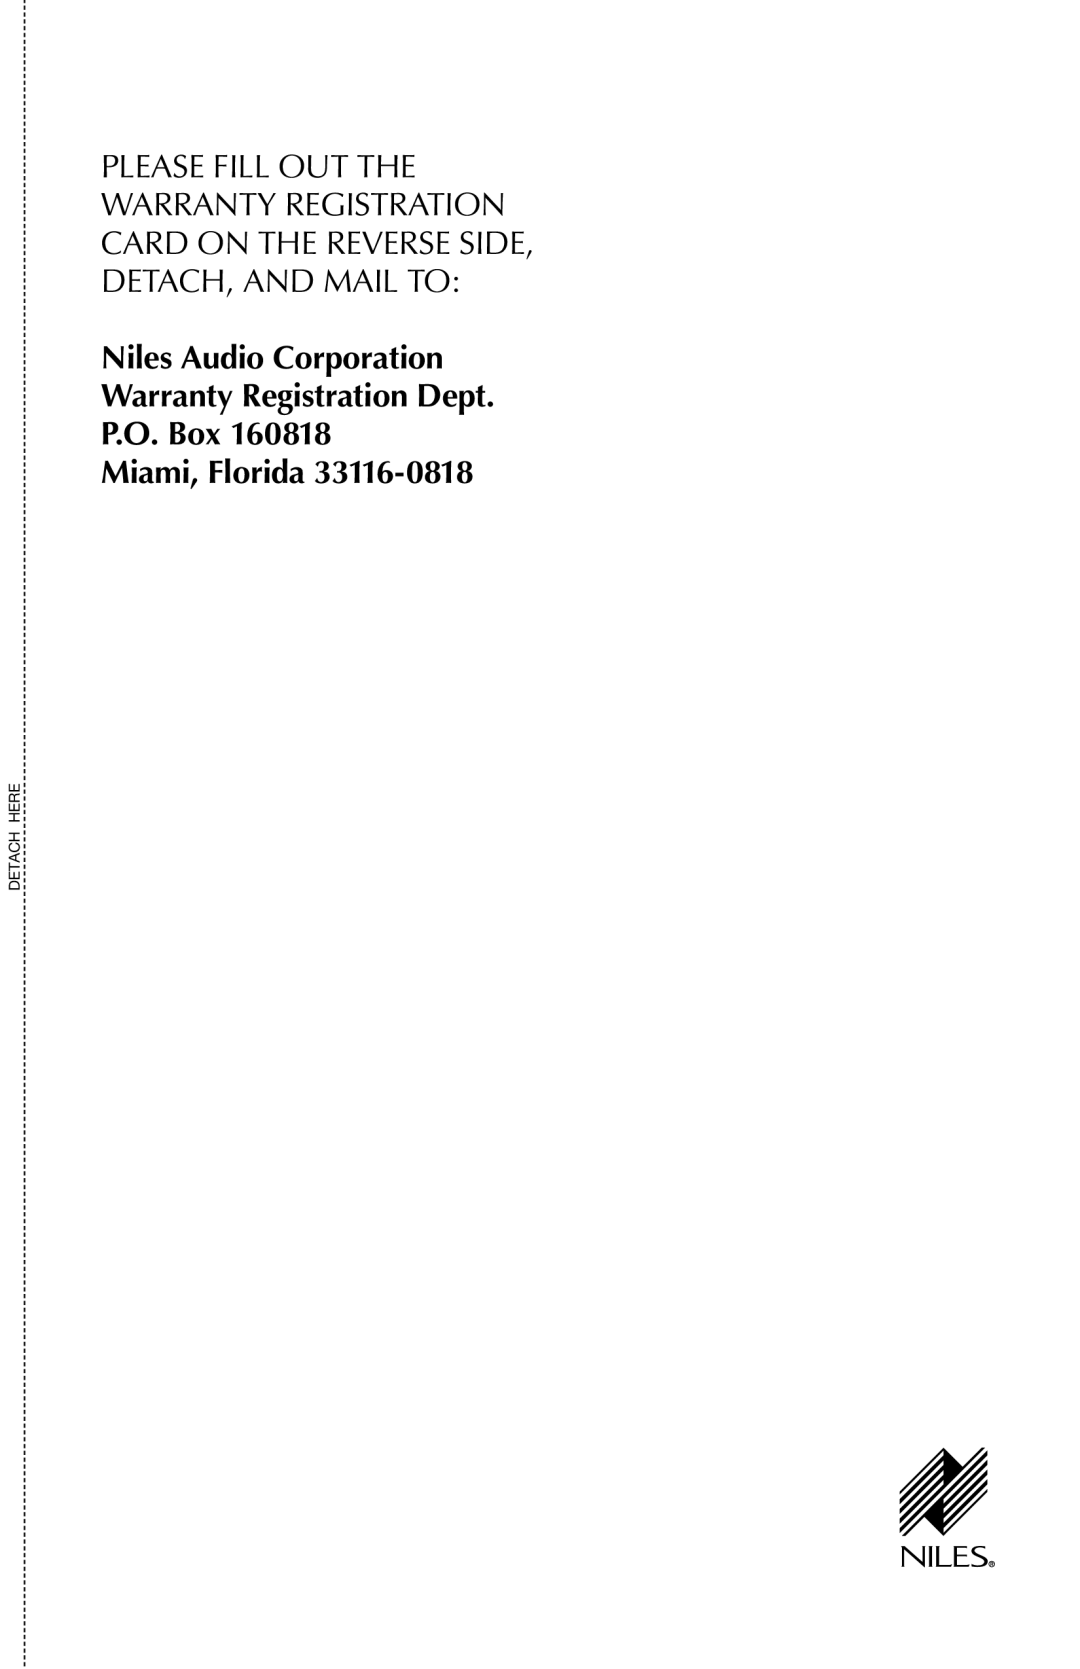 Niles Audio PR5, PR6 manual Niles Audio Corporation, Warranty Registration Dept P.O. Box, Miami, Florida, Detach Here 